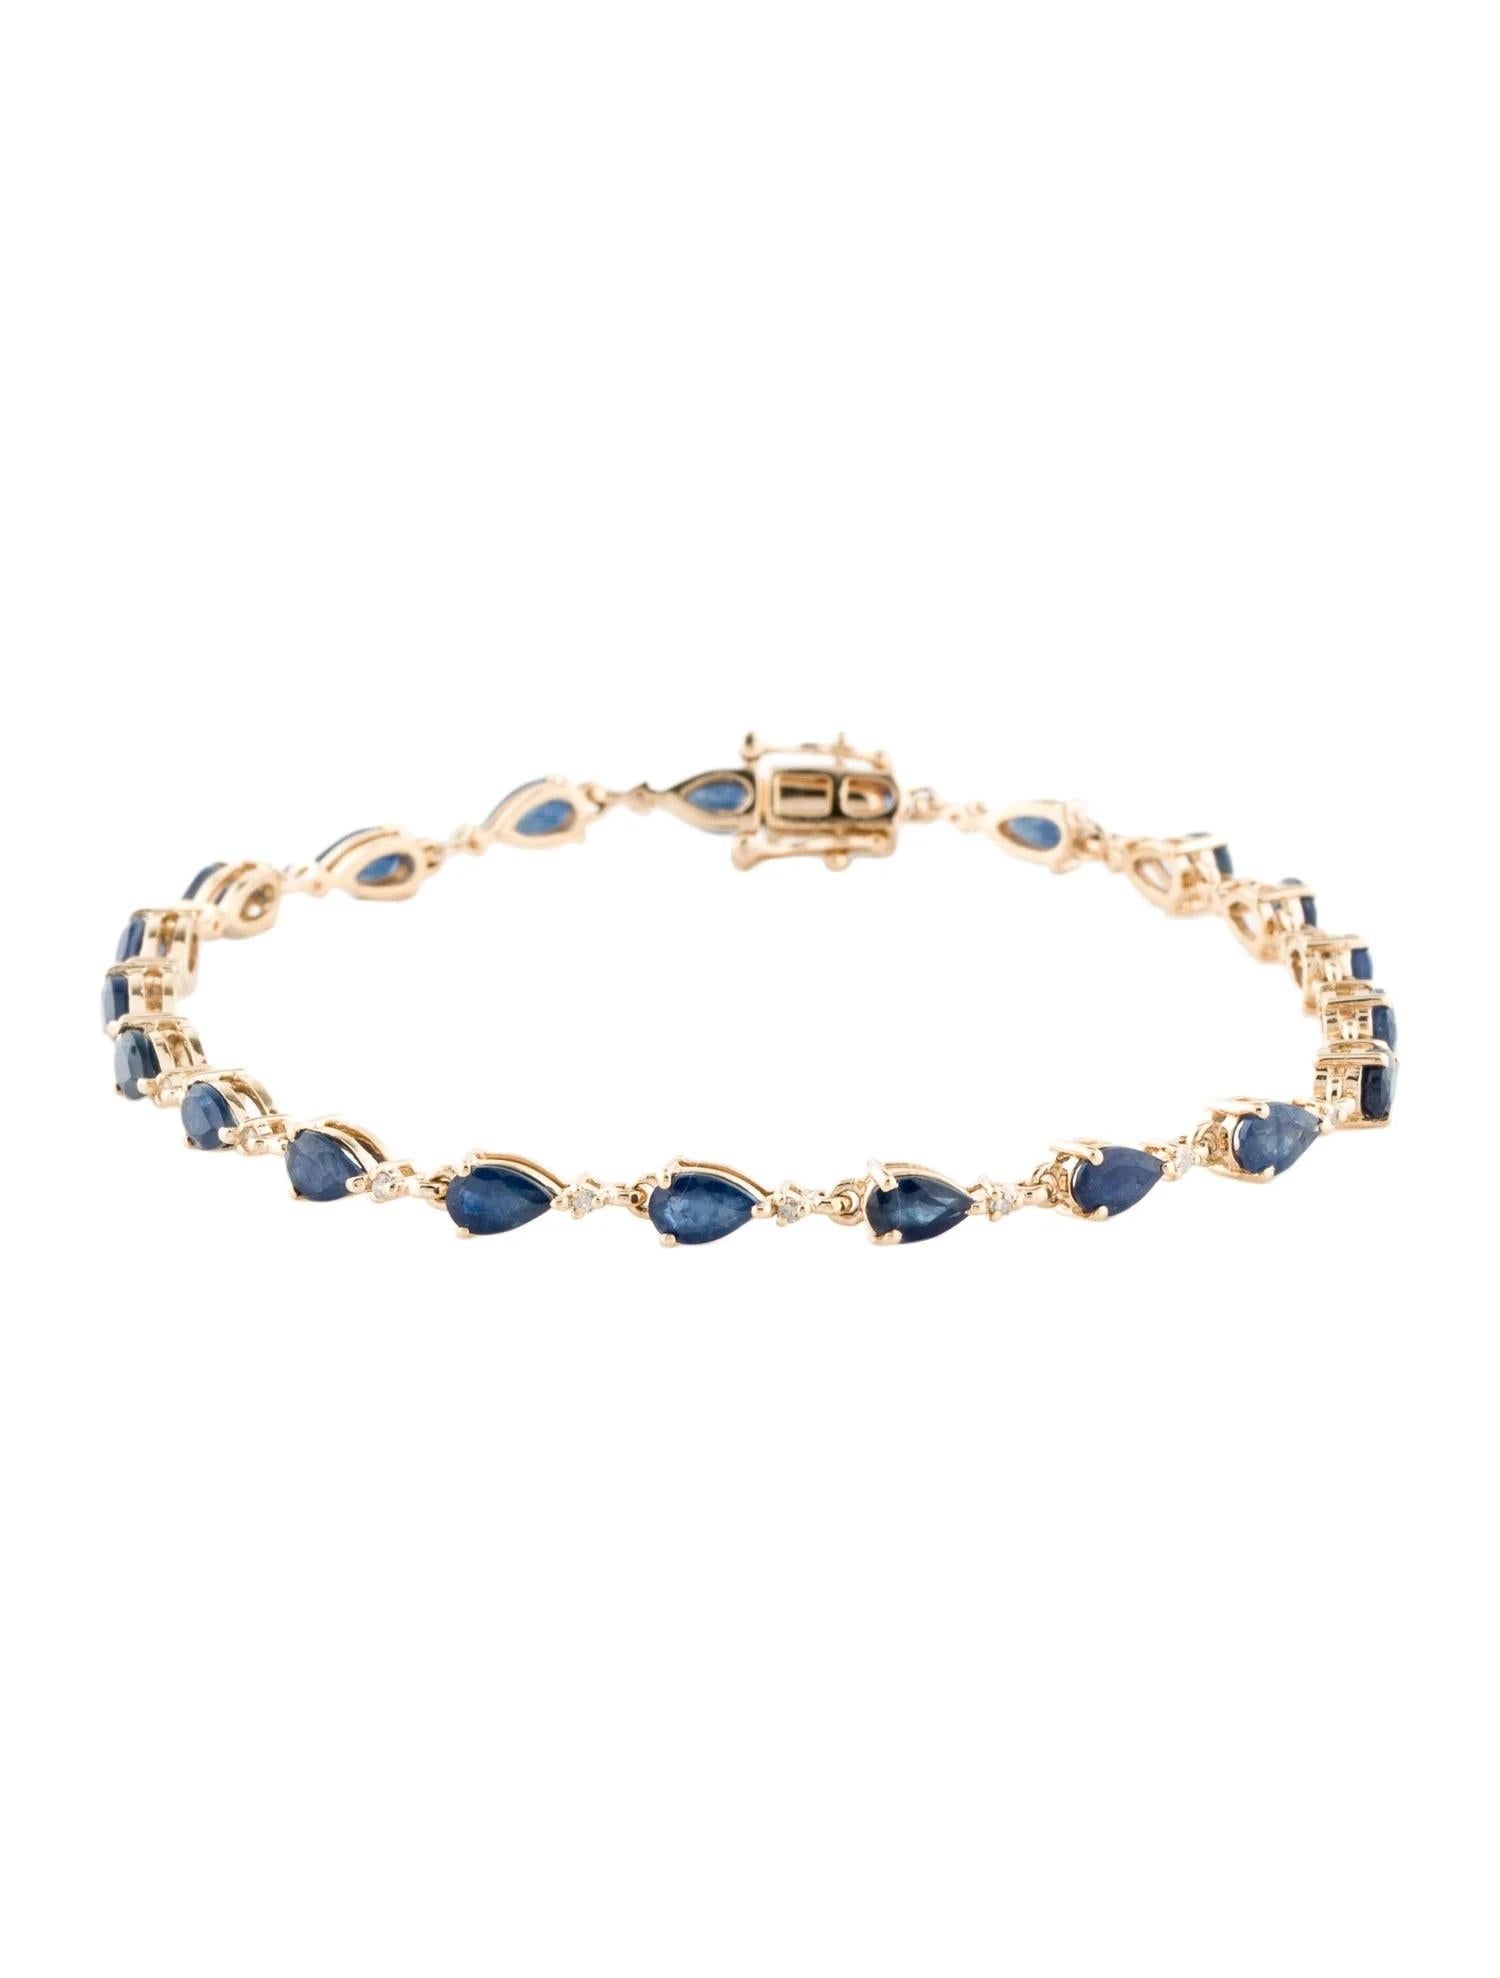 Pear Cut 14K 5.63ctw Sapphire & Diamond Link Bracelet  Faceted Pear Shaped Sapphire  Ye For Sale